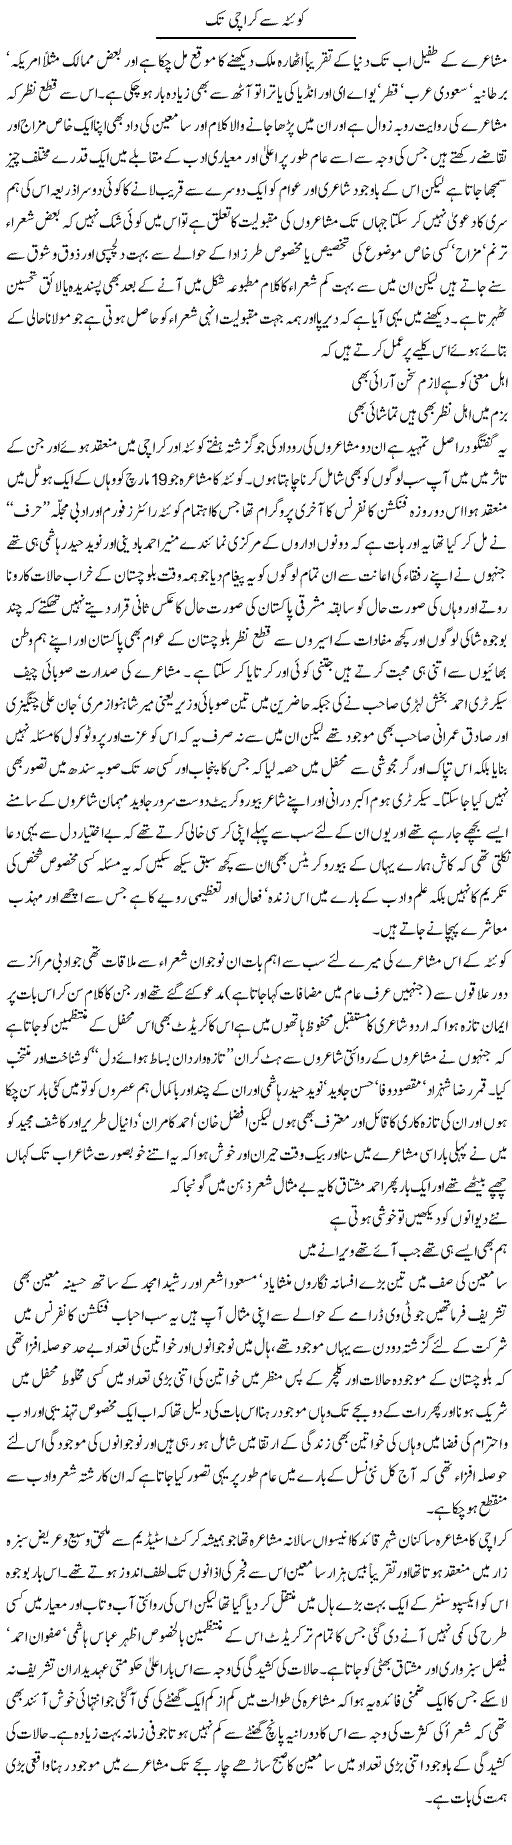 Quetta To Karachi Express Column Amjad Islam 28 March 2011